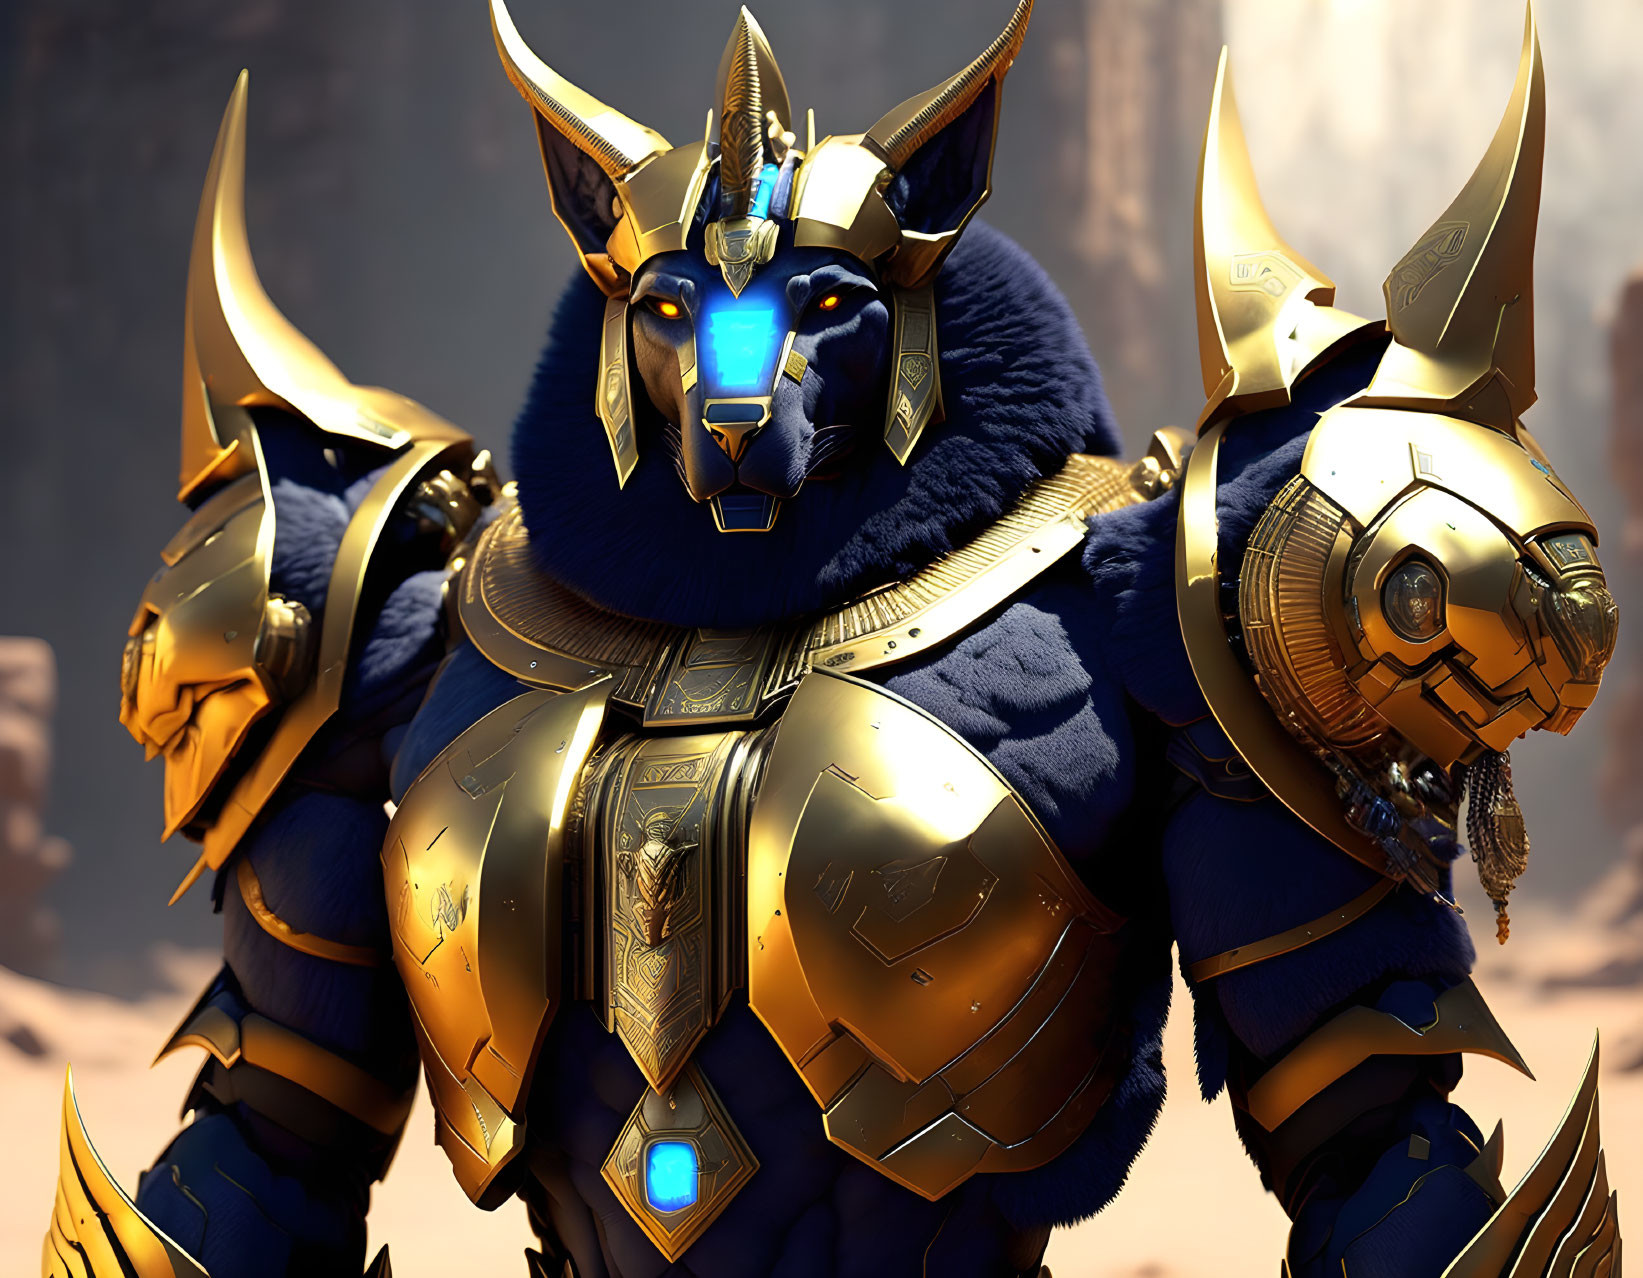 Canine-headed armored figure in golden armor with blue gem in desert scene